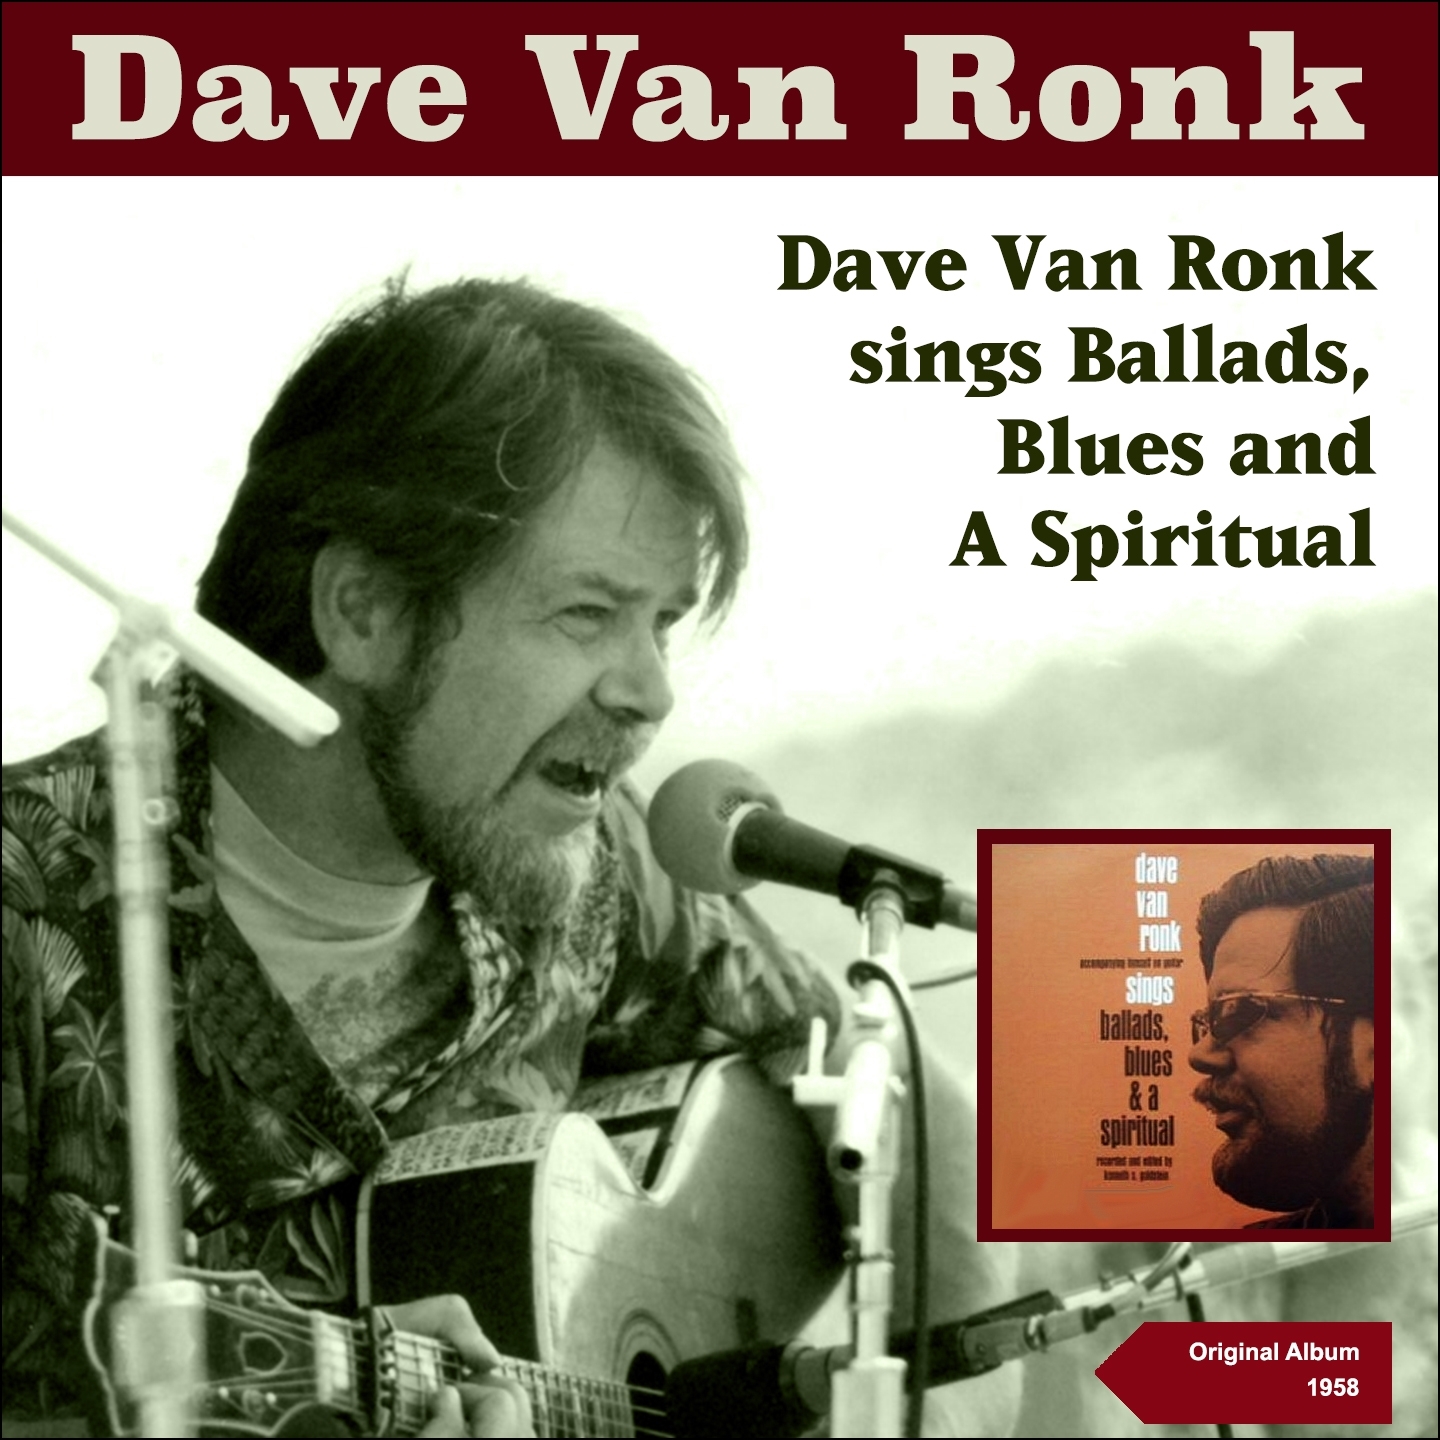 Dave Van Ronk Sings Blues, Ballads and a Spiritual